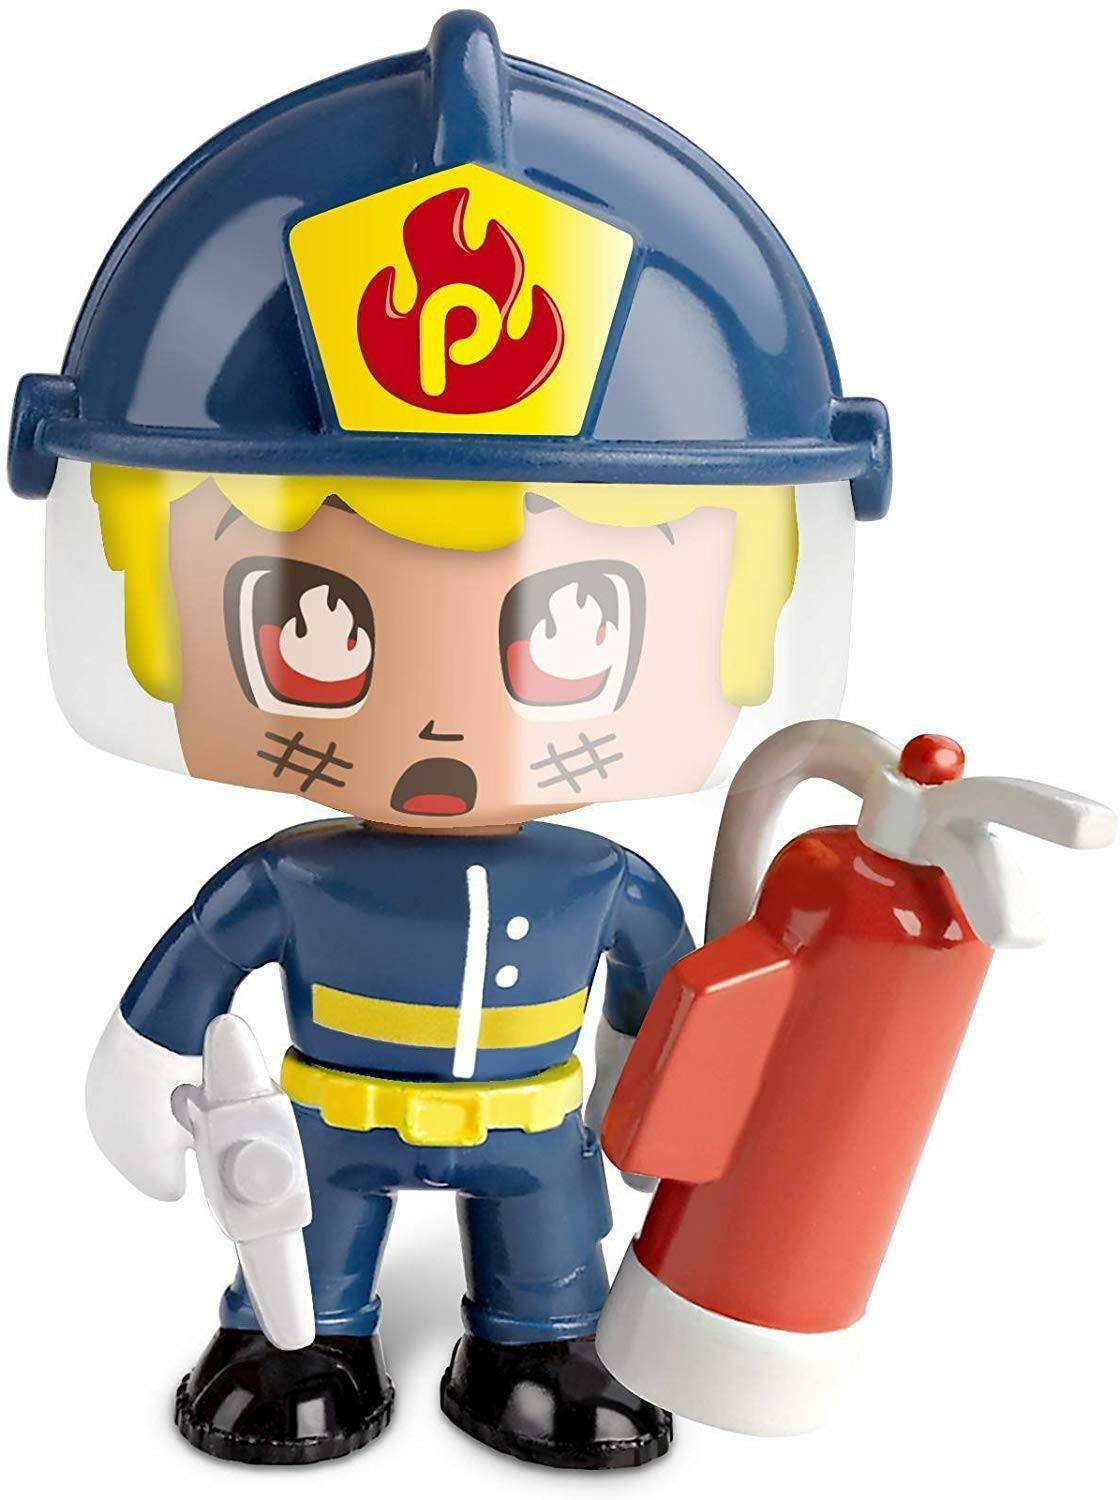 famosa pinypon action - veicolo pompieri + personaggio